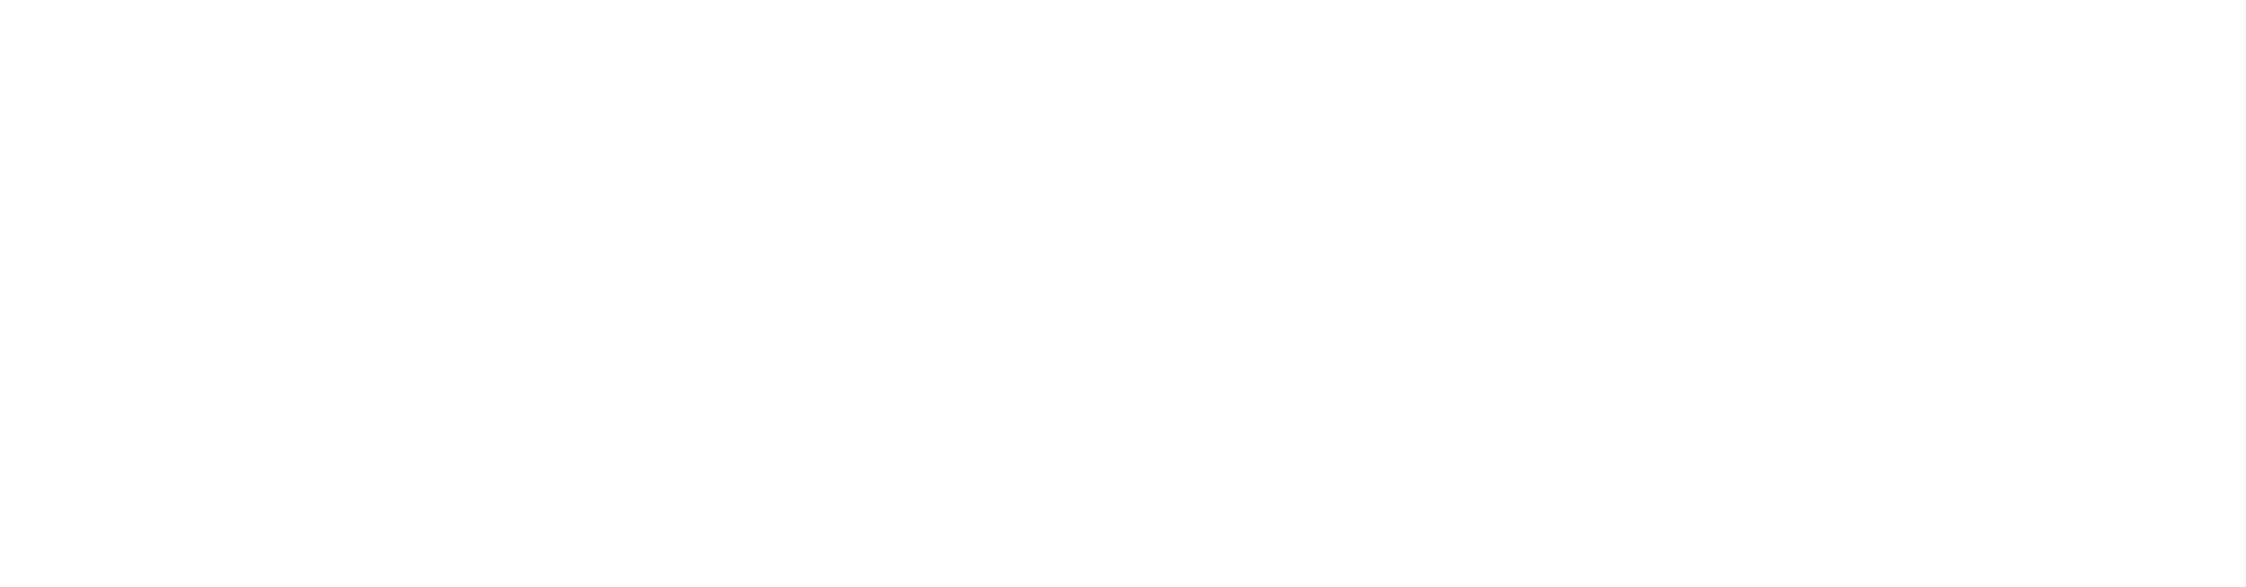 Pixel Framers Custom VR Experiences